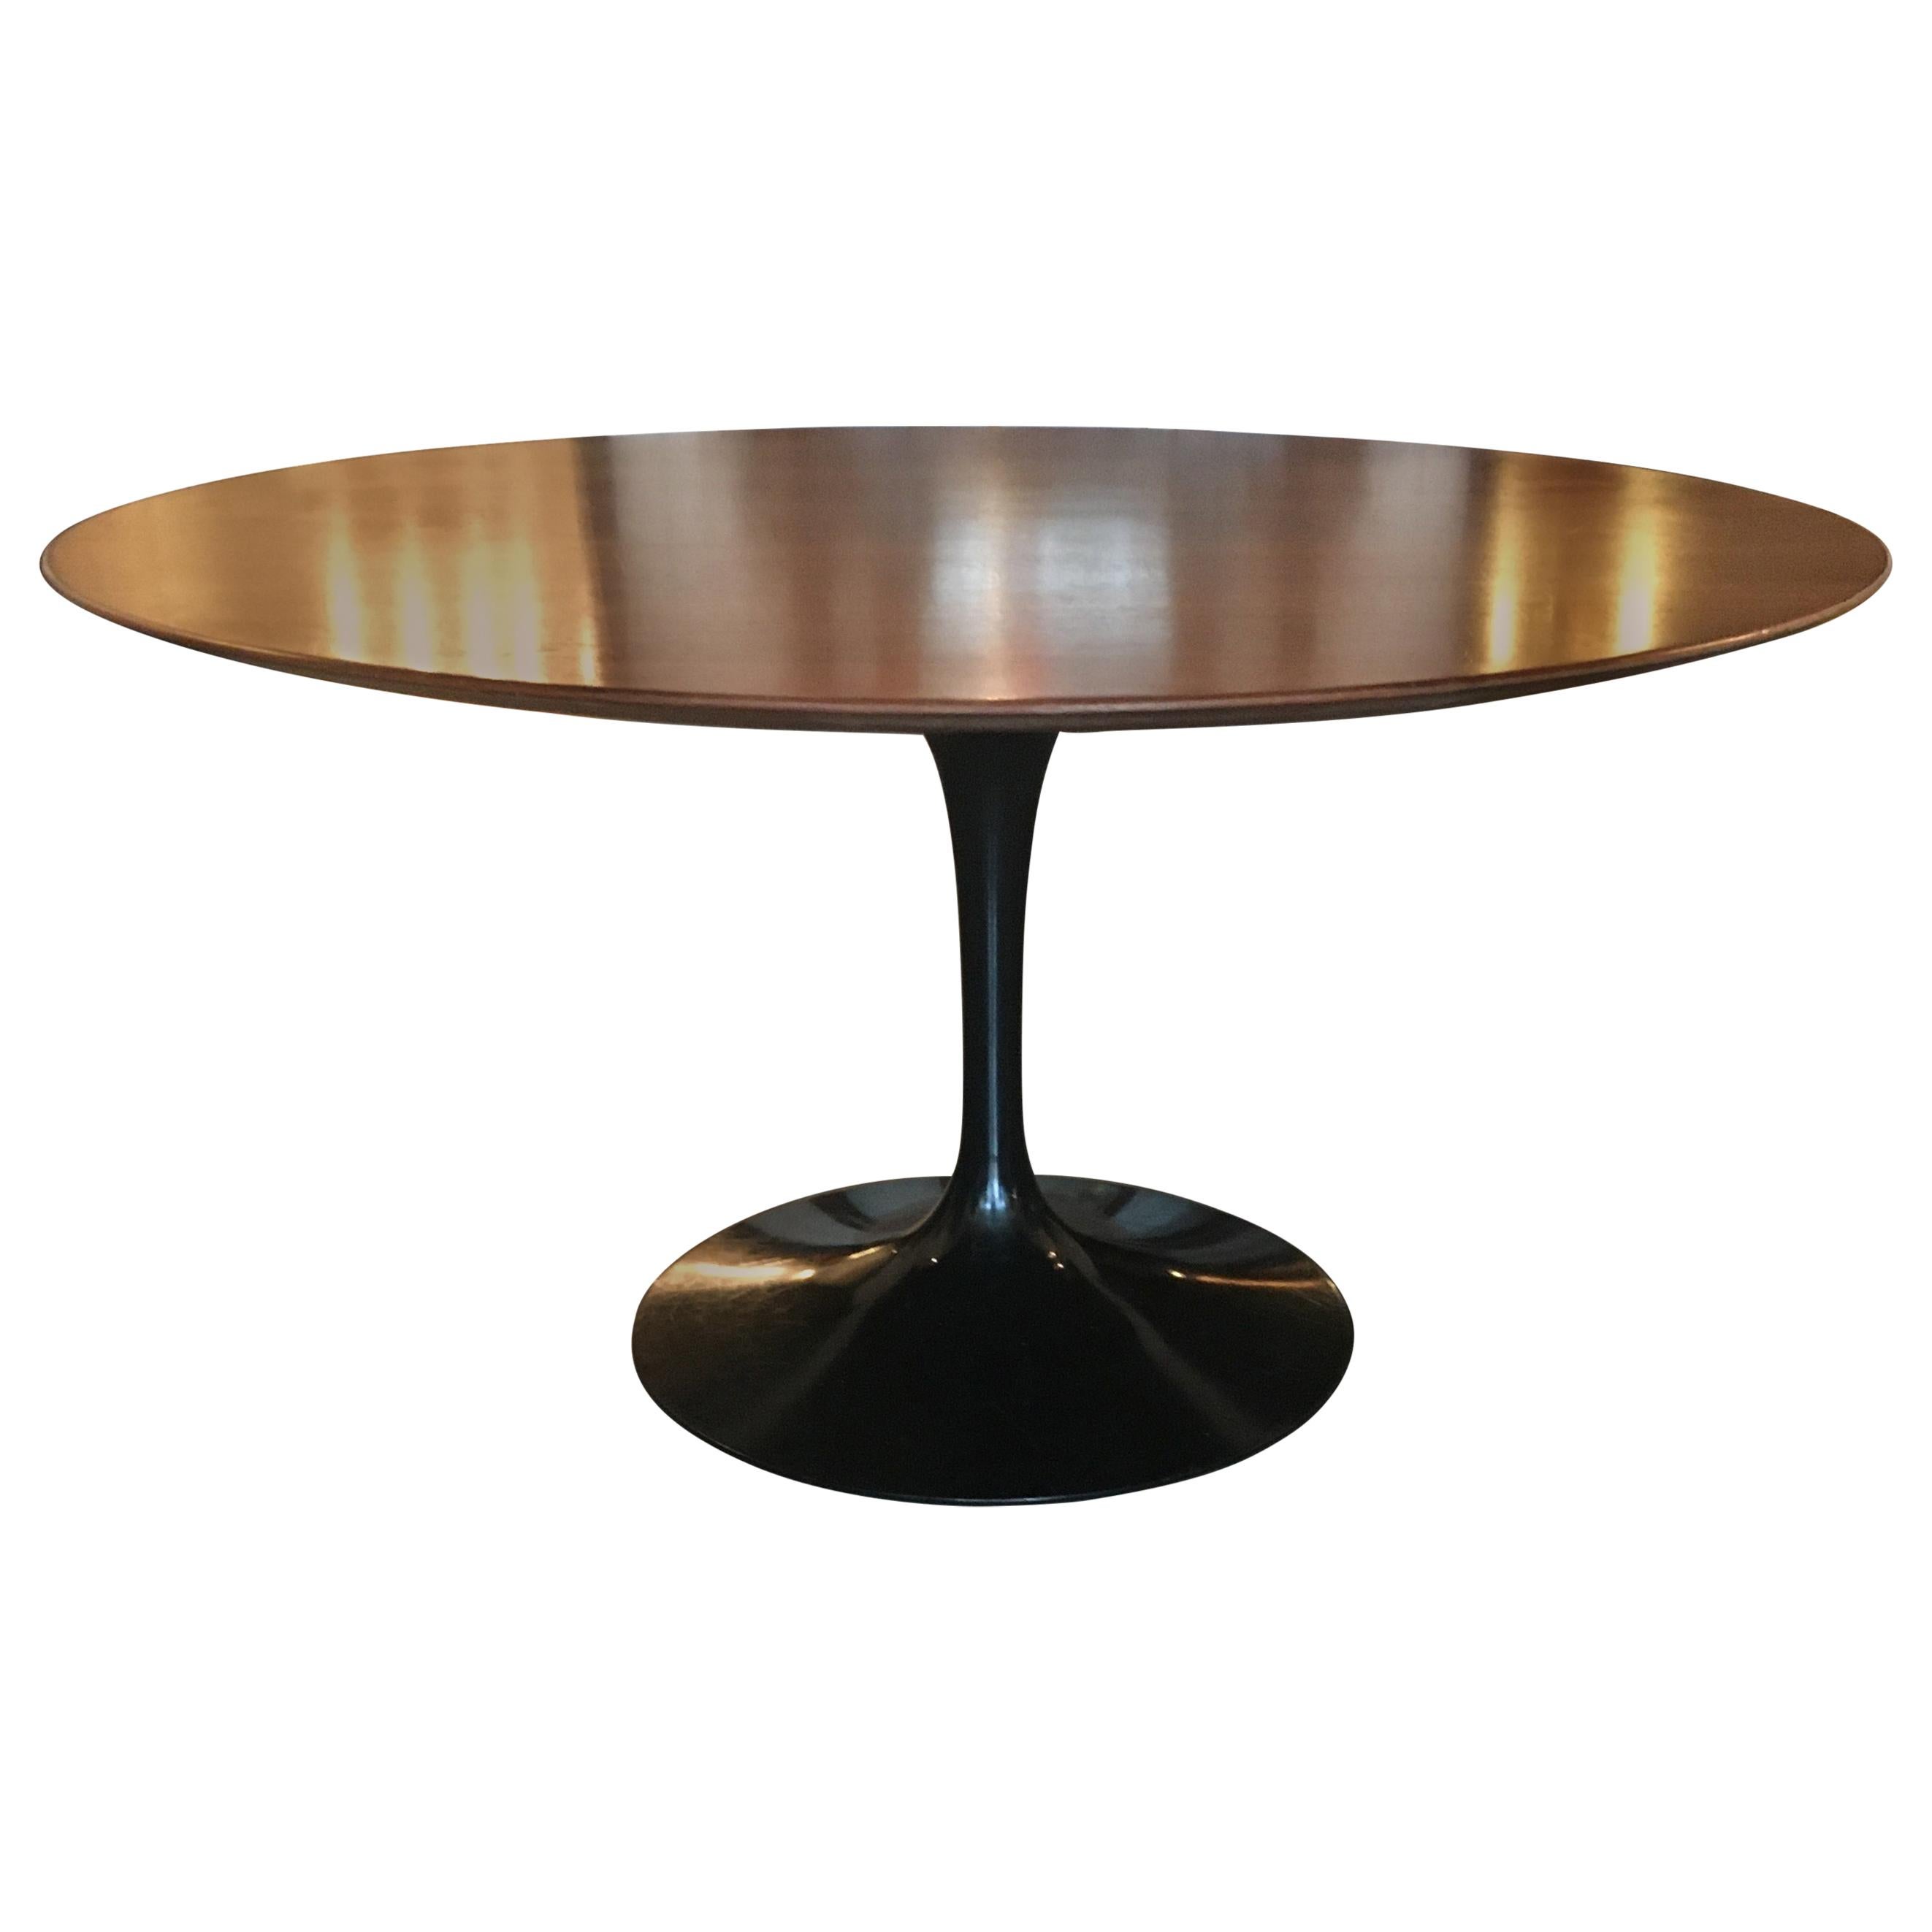 Eero Saarinen for Knoll Tulip Table, Rare Black Base with Teak Top, Signed